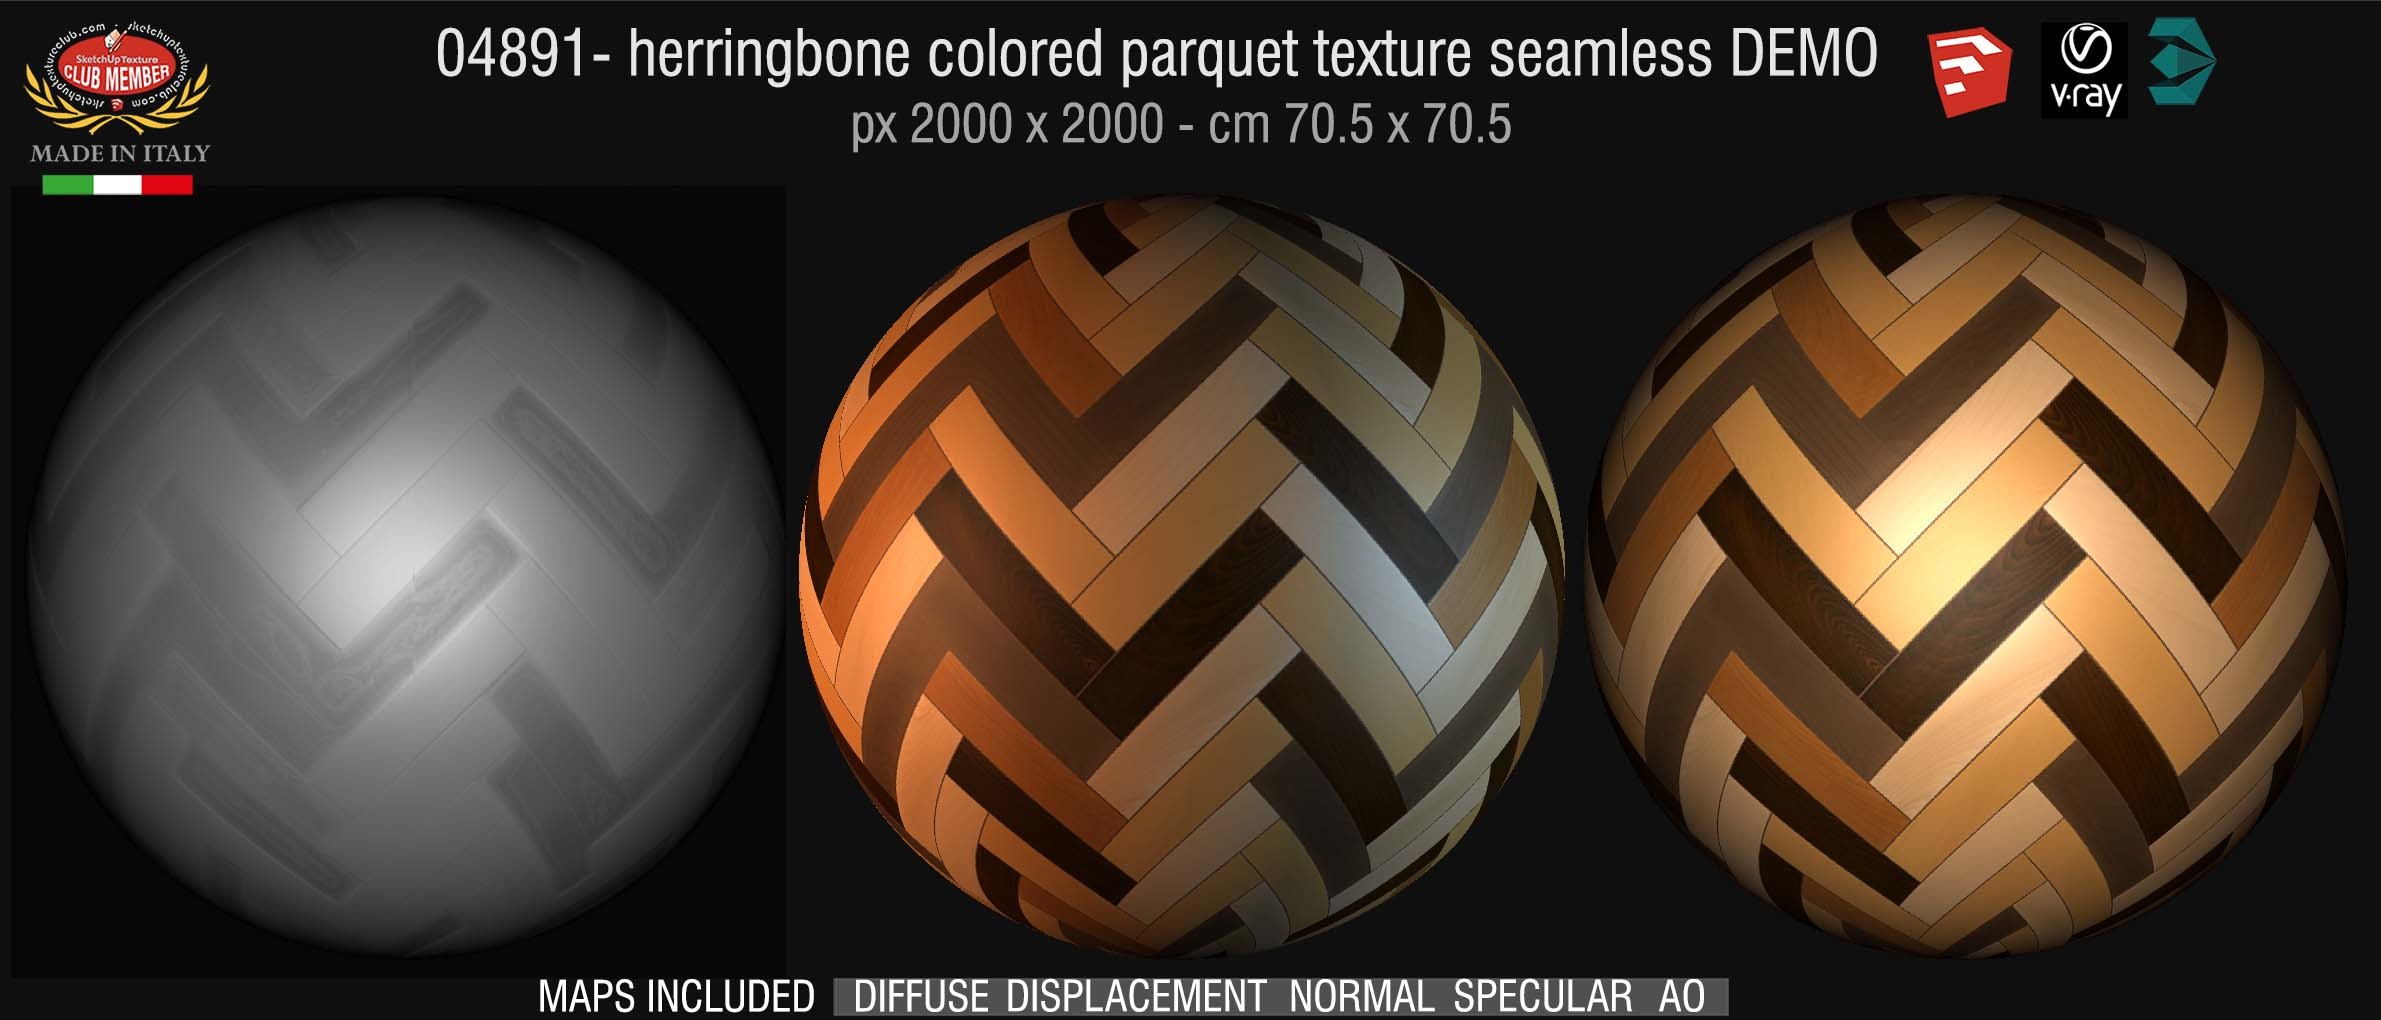 04891 Herringbone colored parquet texture seamless + maps DEMO